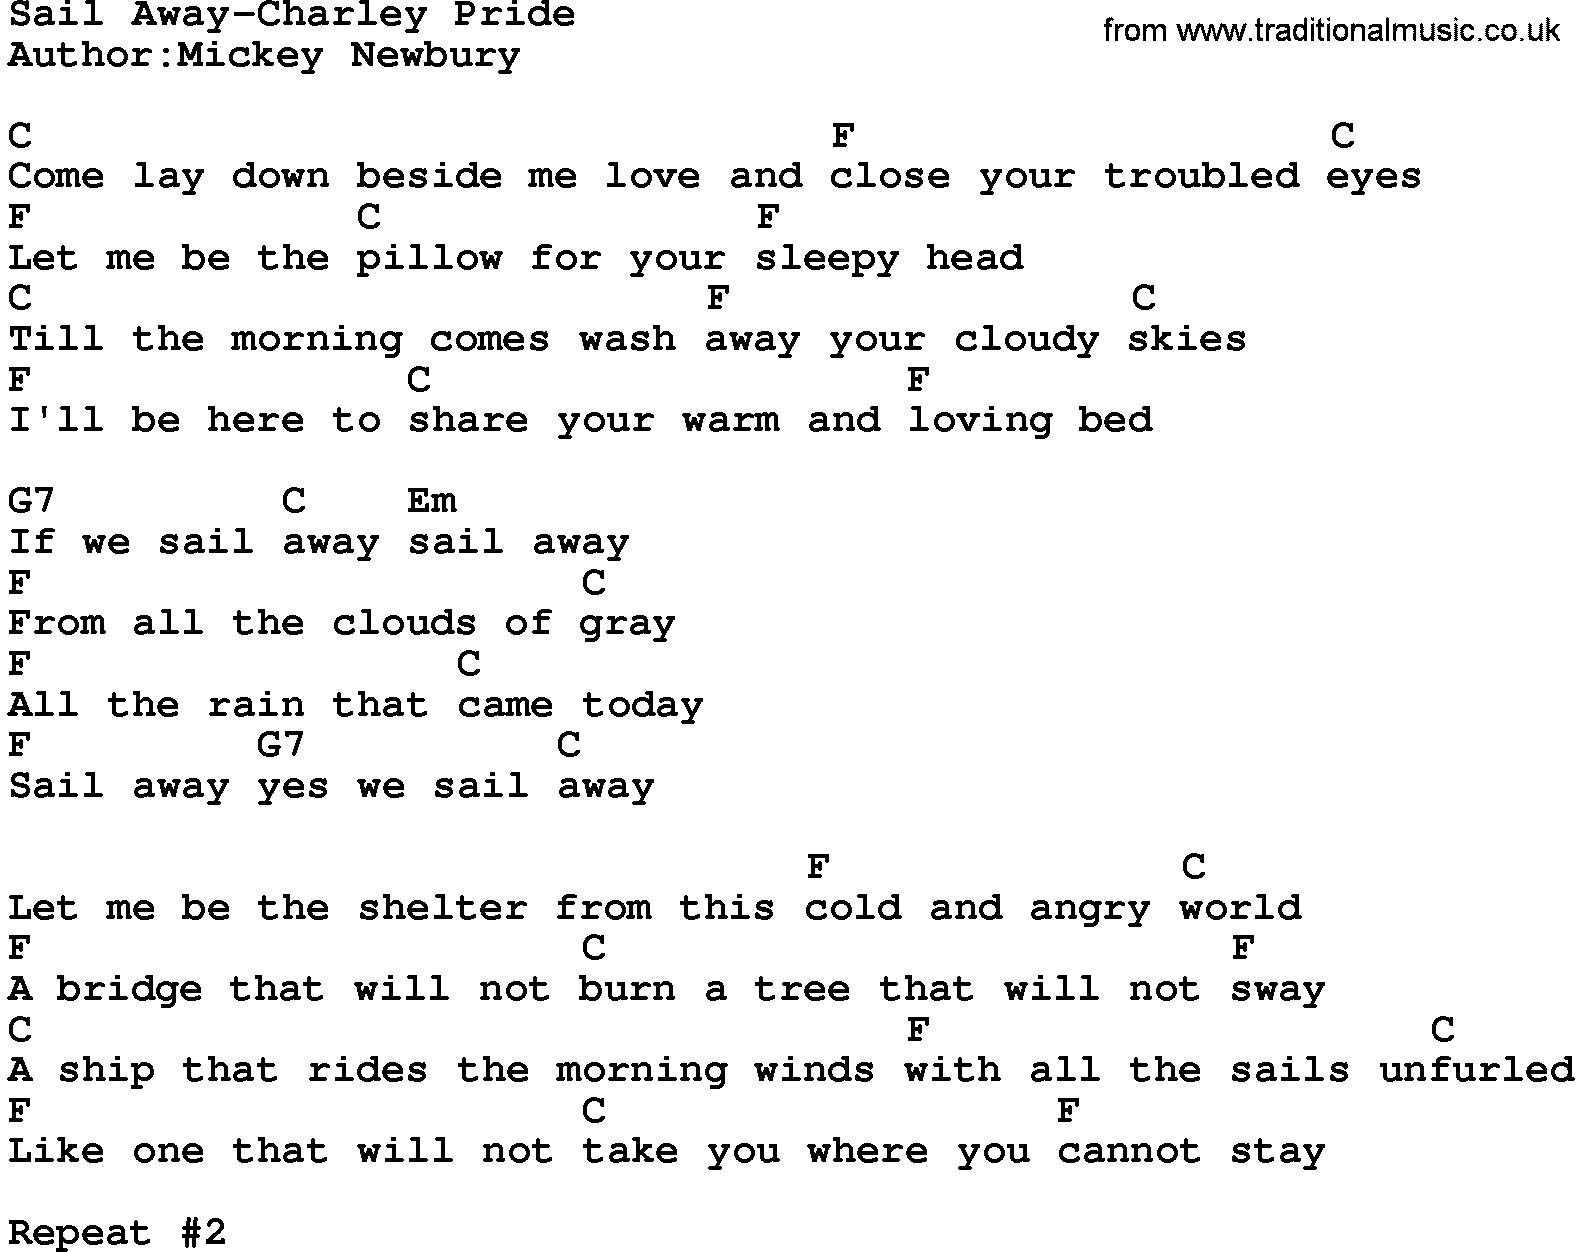 Country music song: Sail Away-Charley Pride lyrics and chords